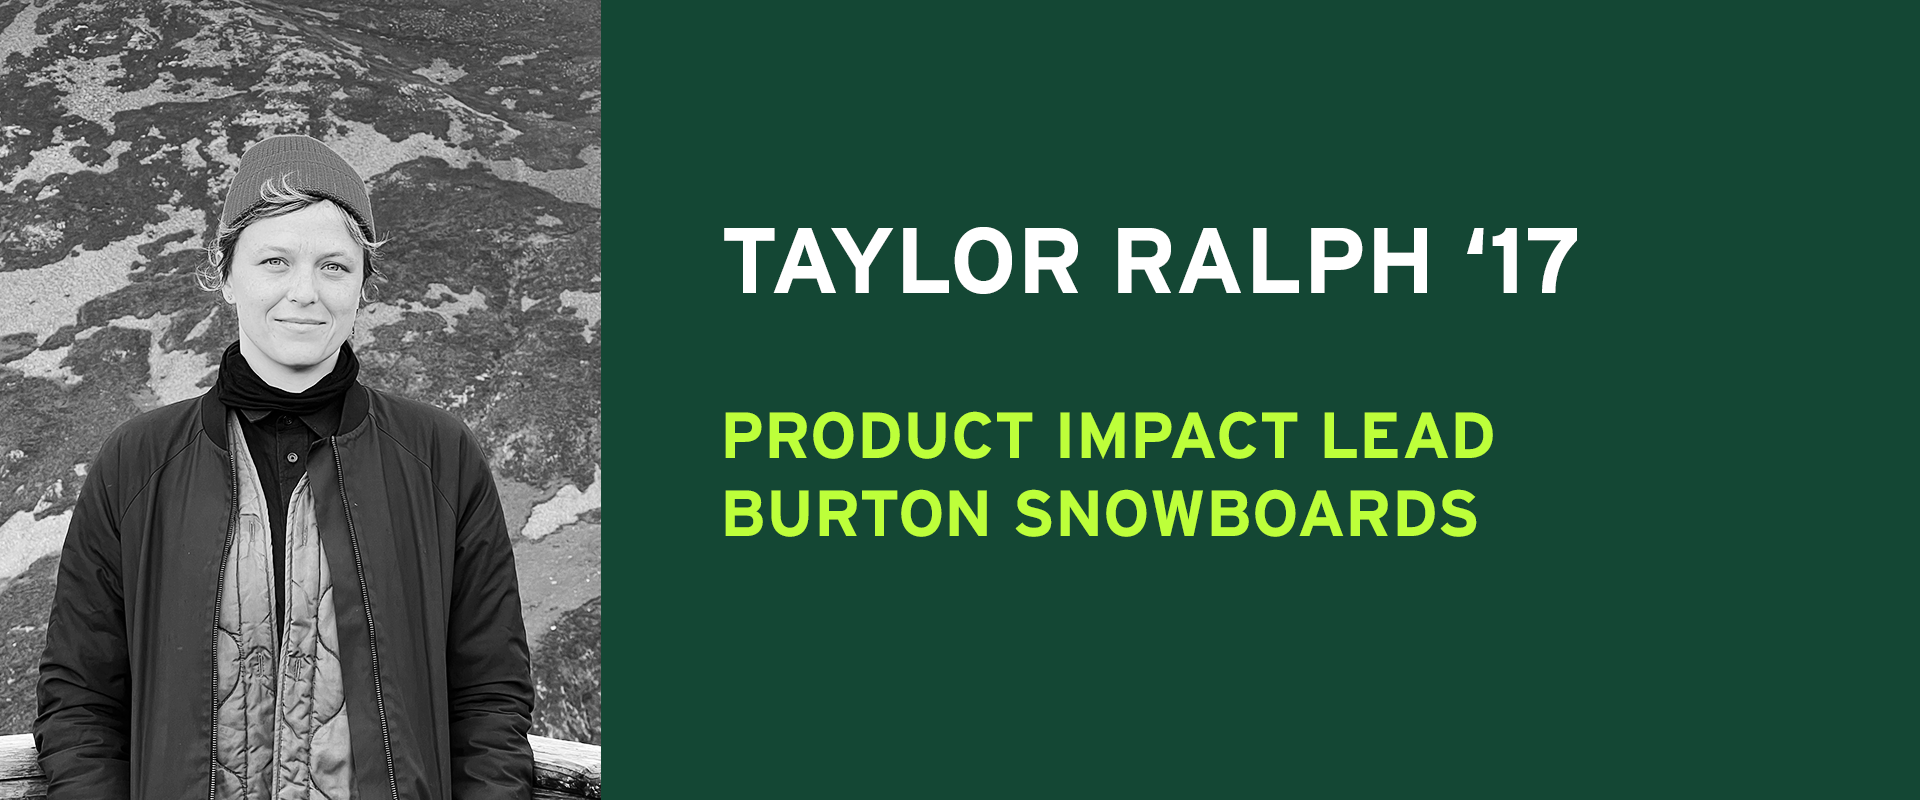 Taylor Ralph 17 Product Impact Lead Burton Snowboards